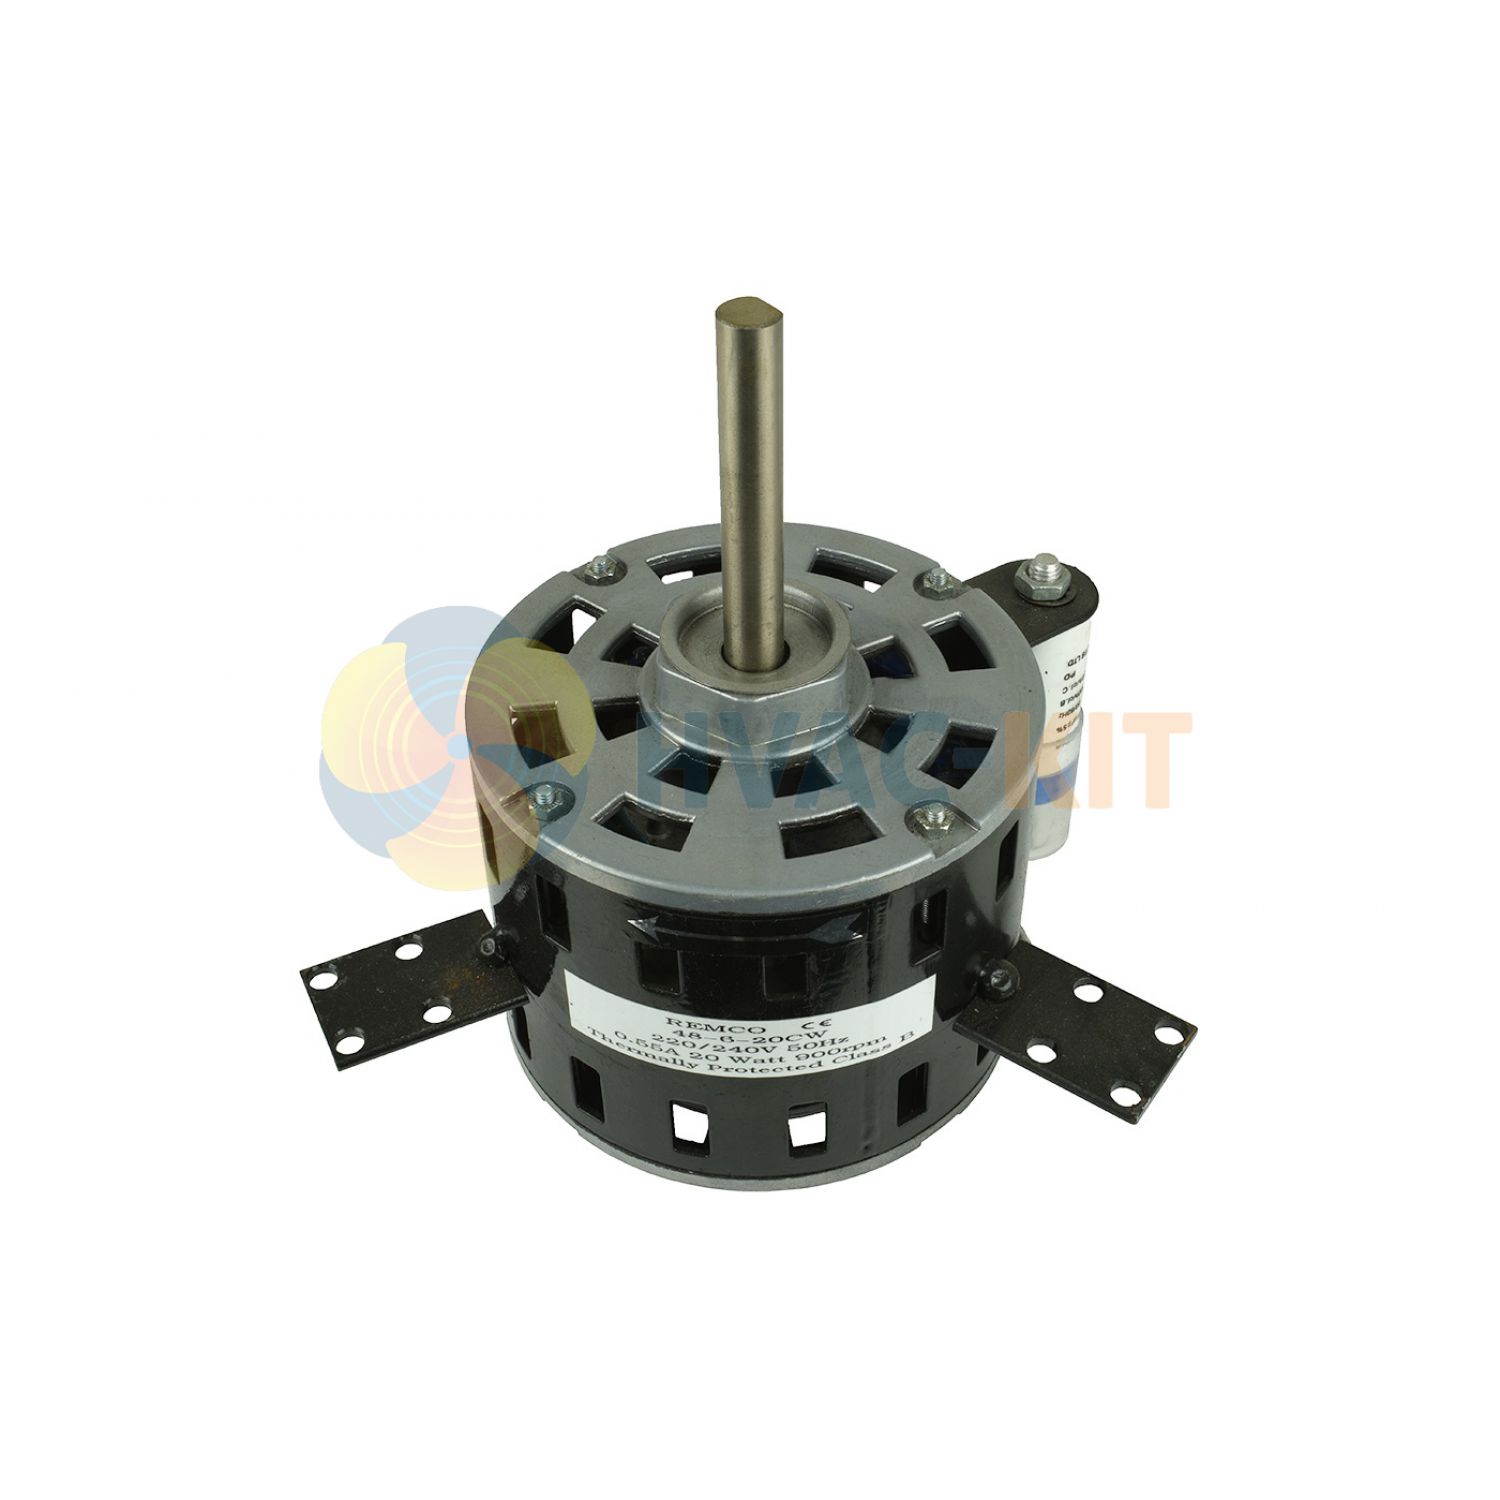 48-6-20CW_1 Radial Lug Mount Motor